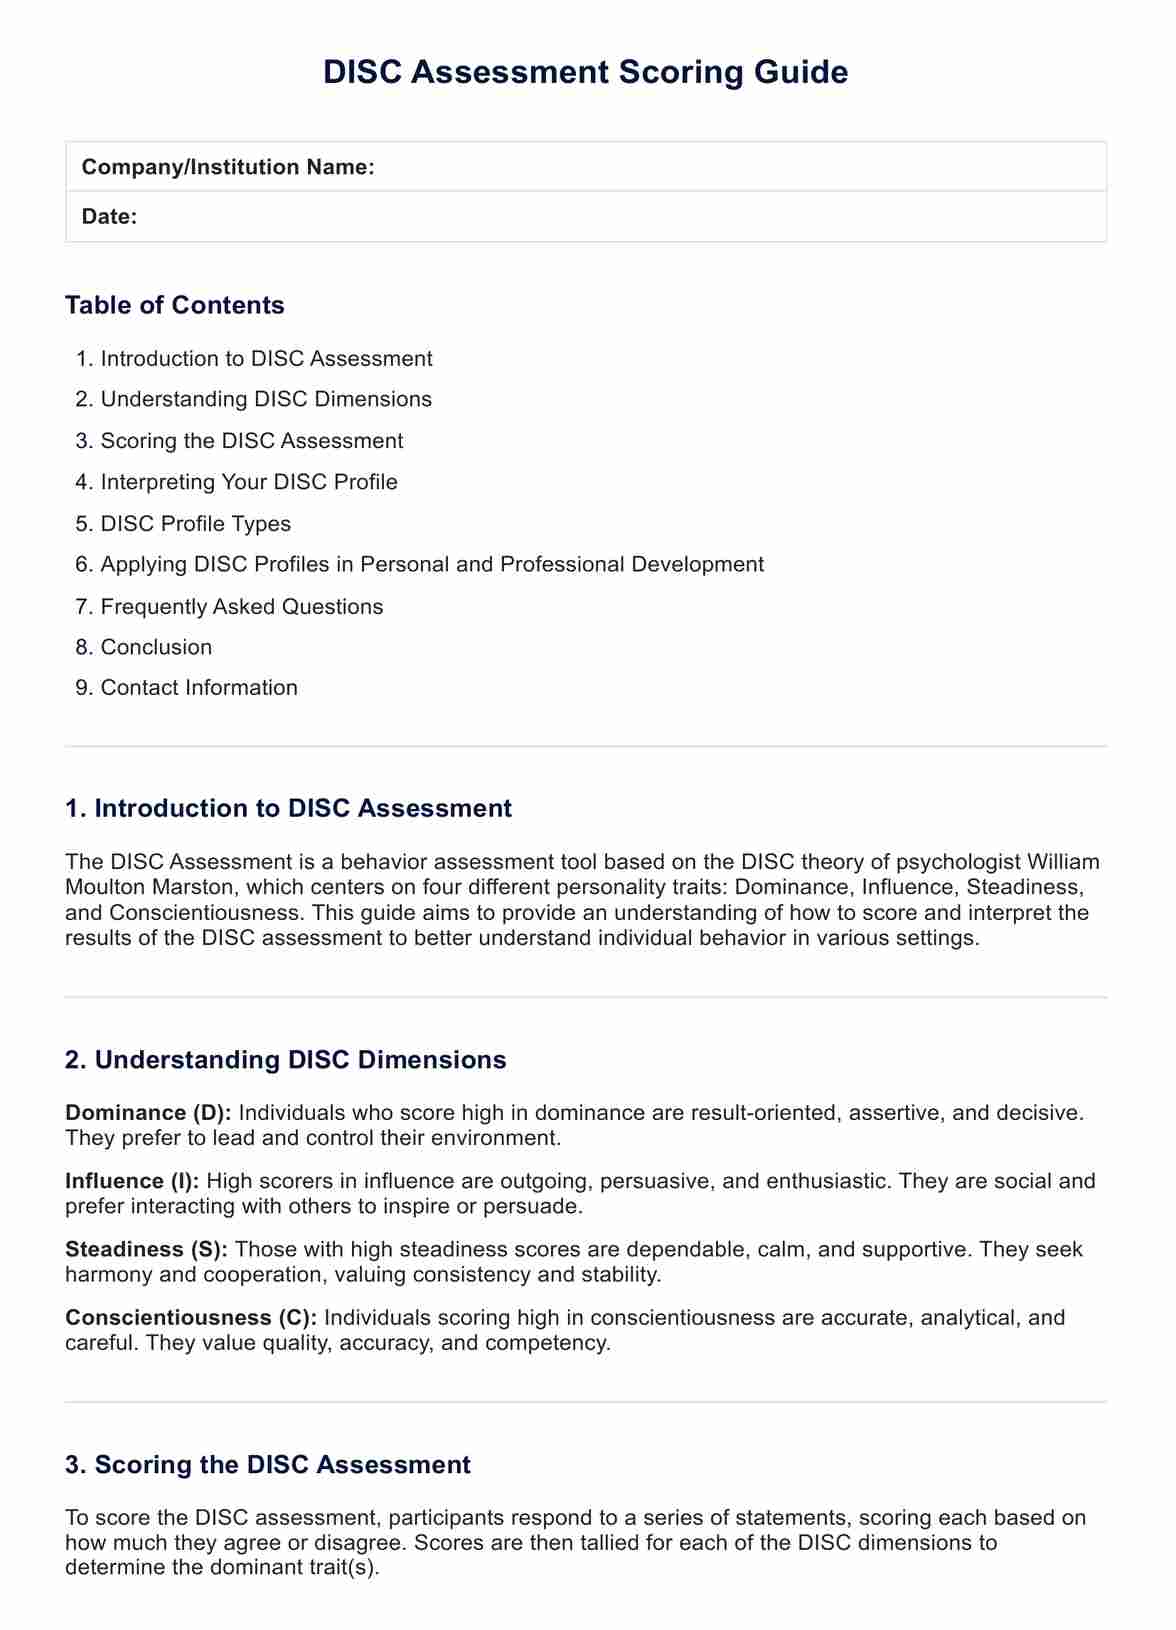 DISC Assessment Scoring Guide PDF PDF Example